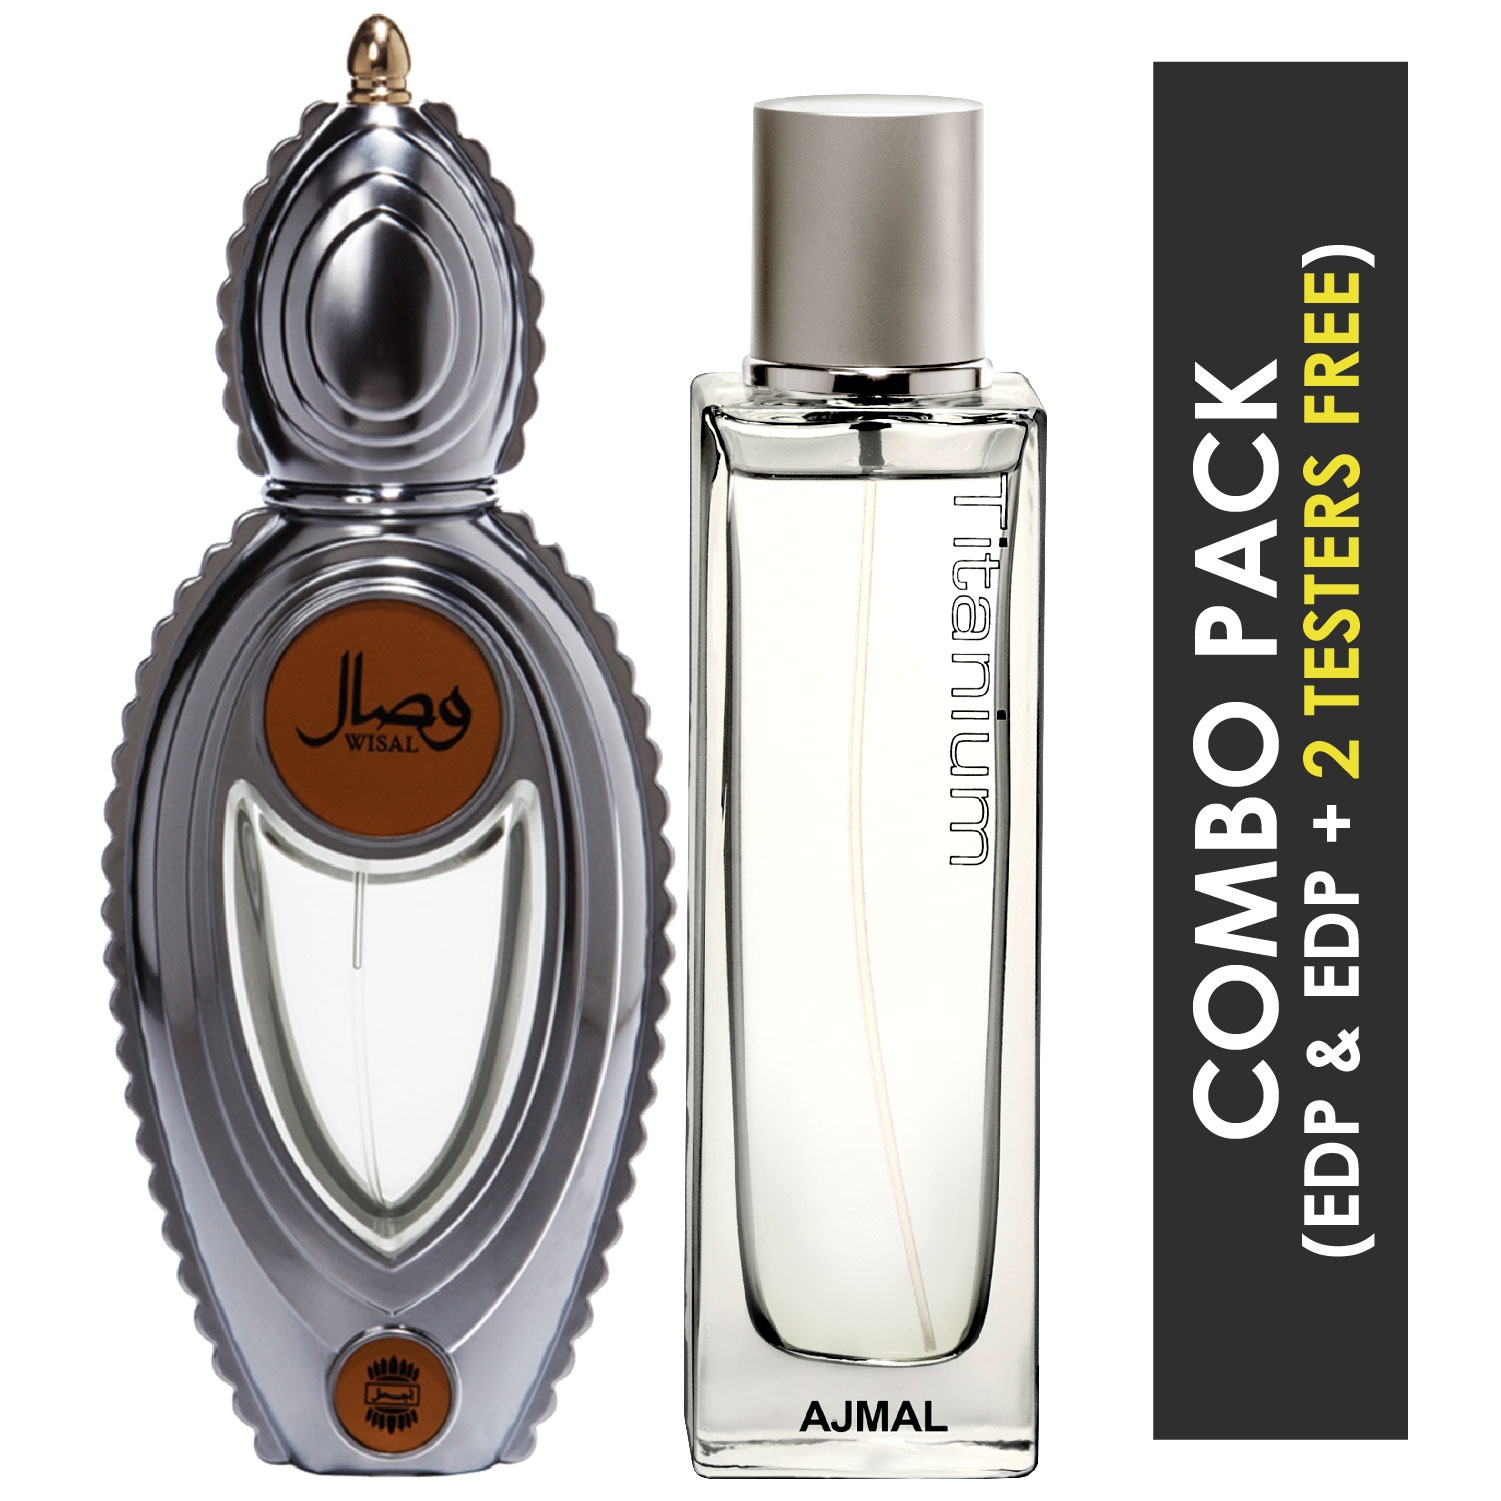 Ajmal | Ajmal  Wisal EDP Floral Musky Perfume 50ml for Women and Titanium EDP Citrus Spicy Perfume 100ml for Men + 2 Parfum Testers FREE